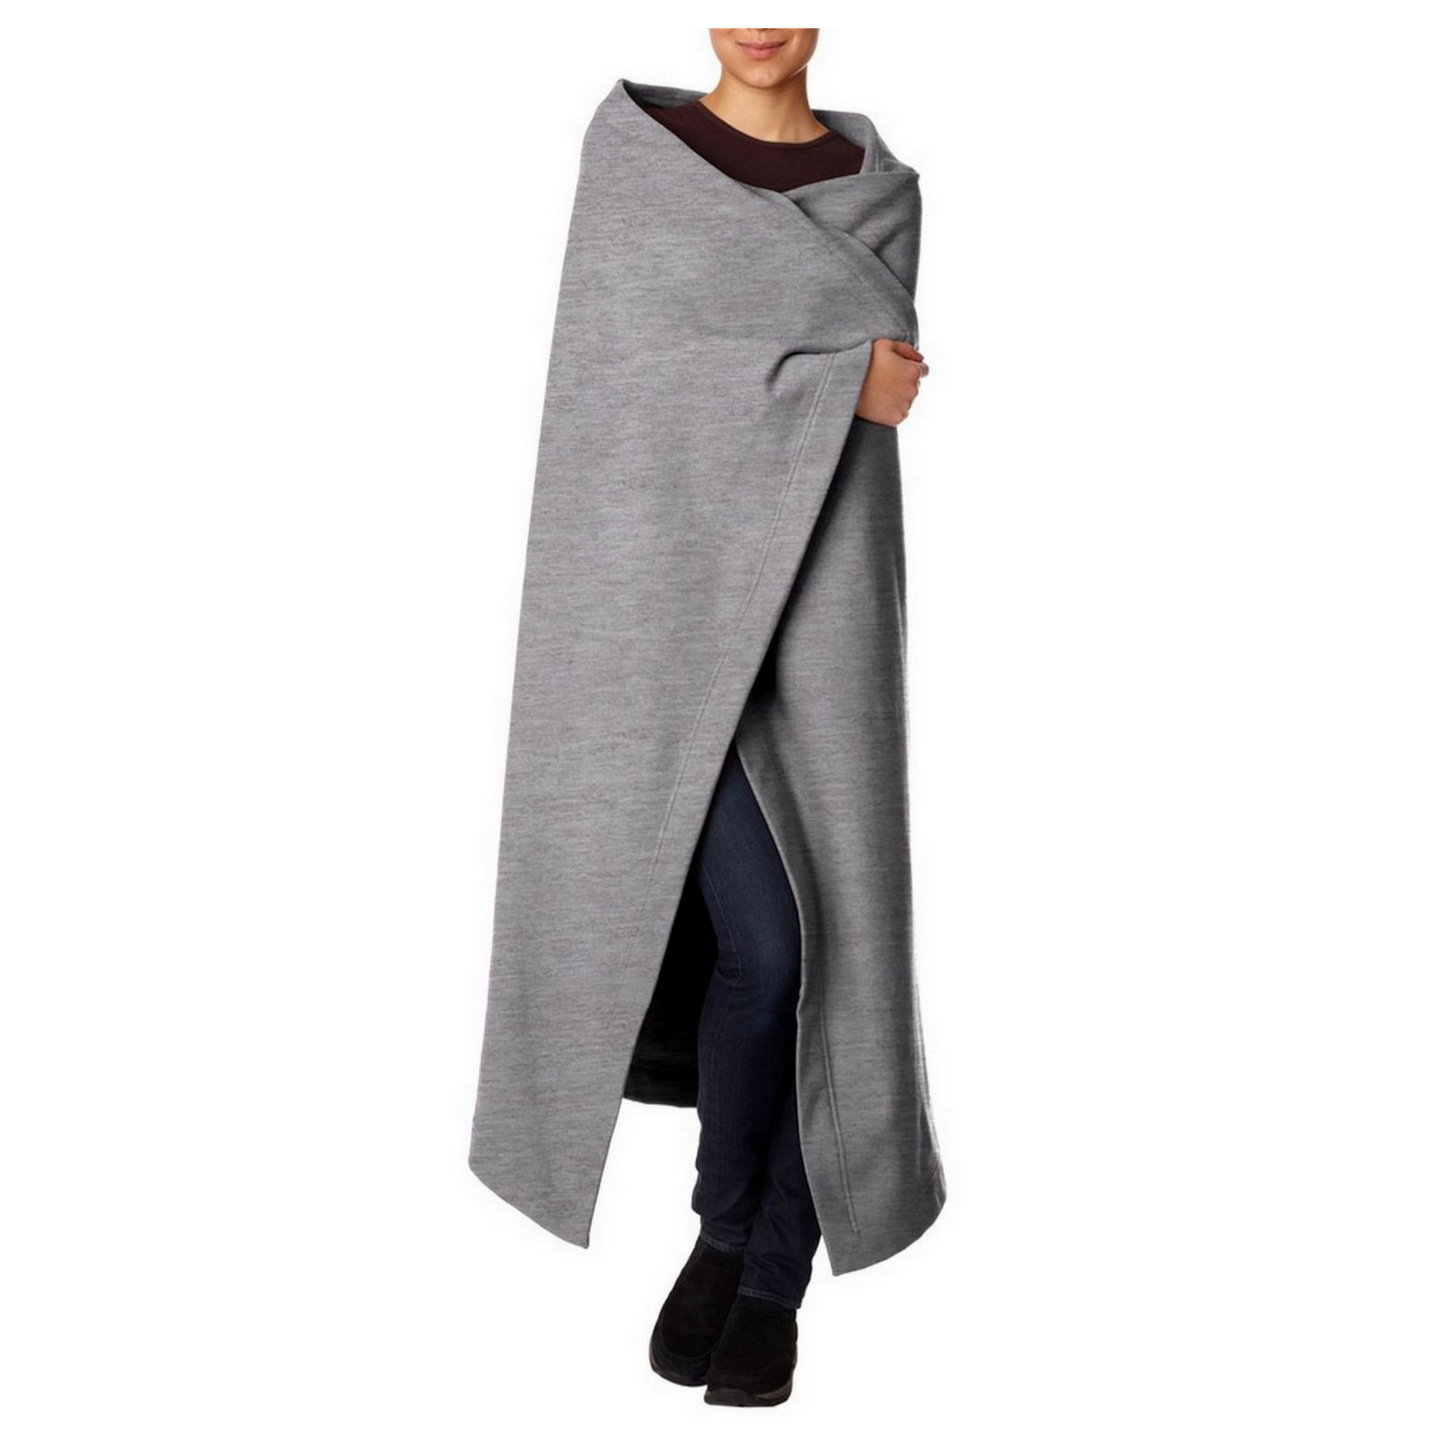 Homebody Fleece Blanket 50” X 60” - 3 colors